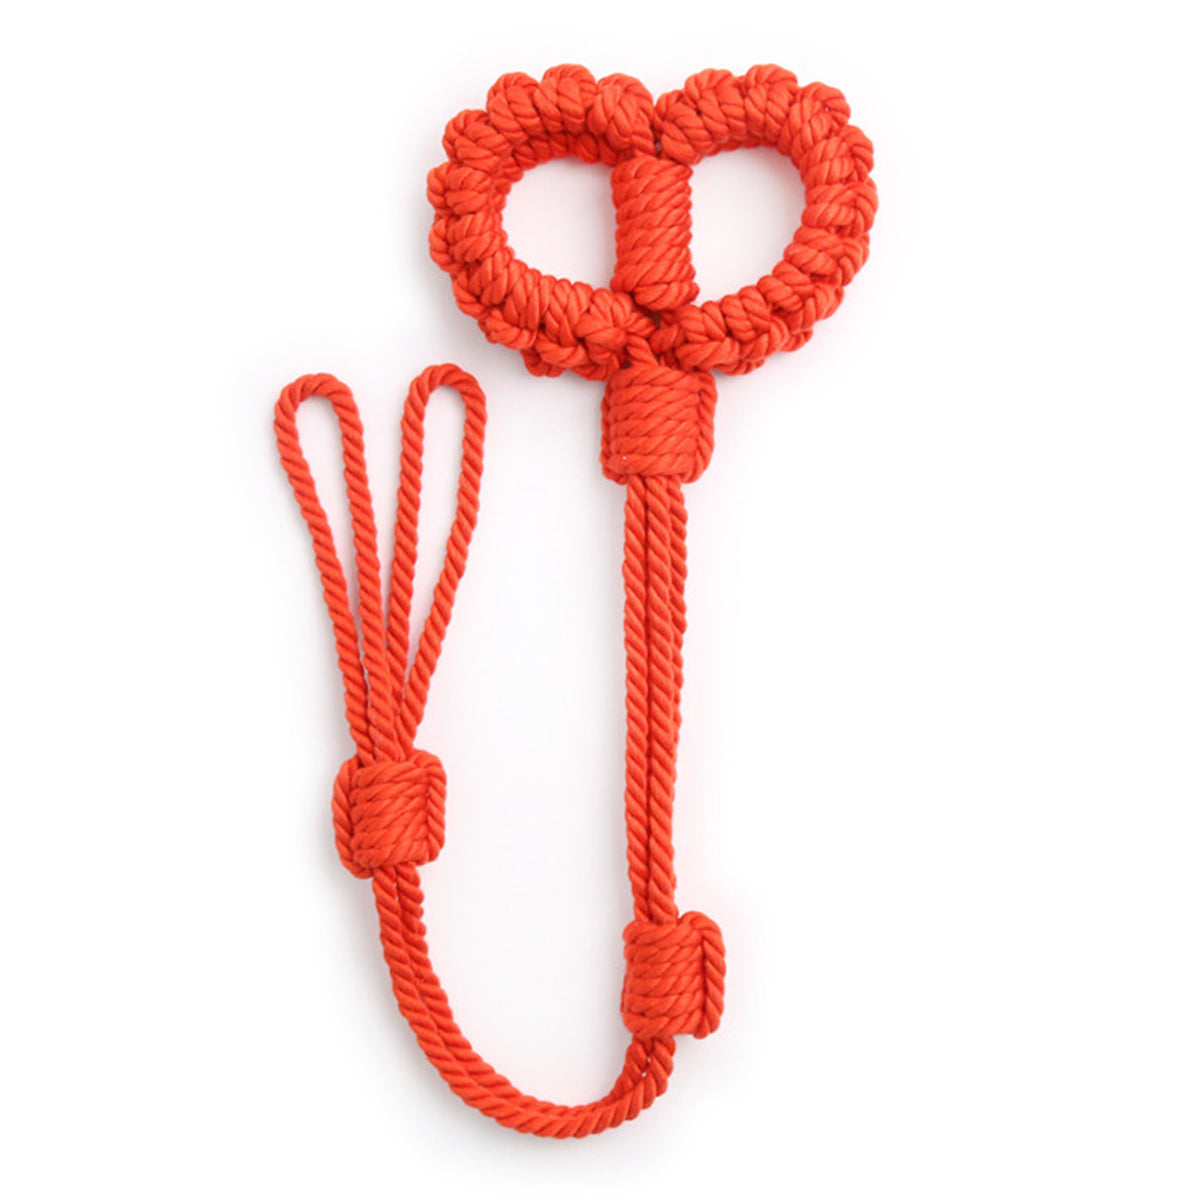 Handmade Shibari Rope Handcuffs with Leash